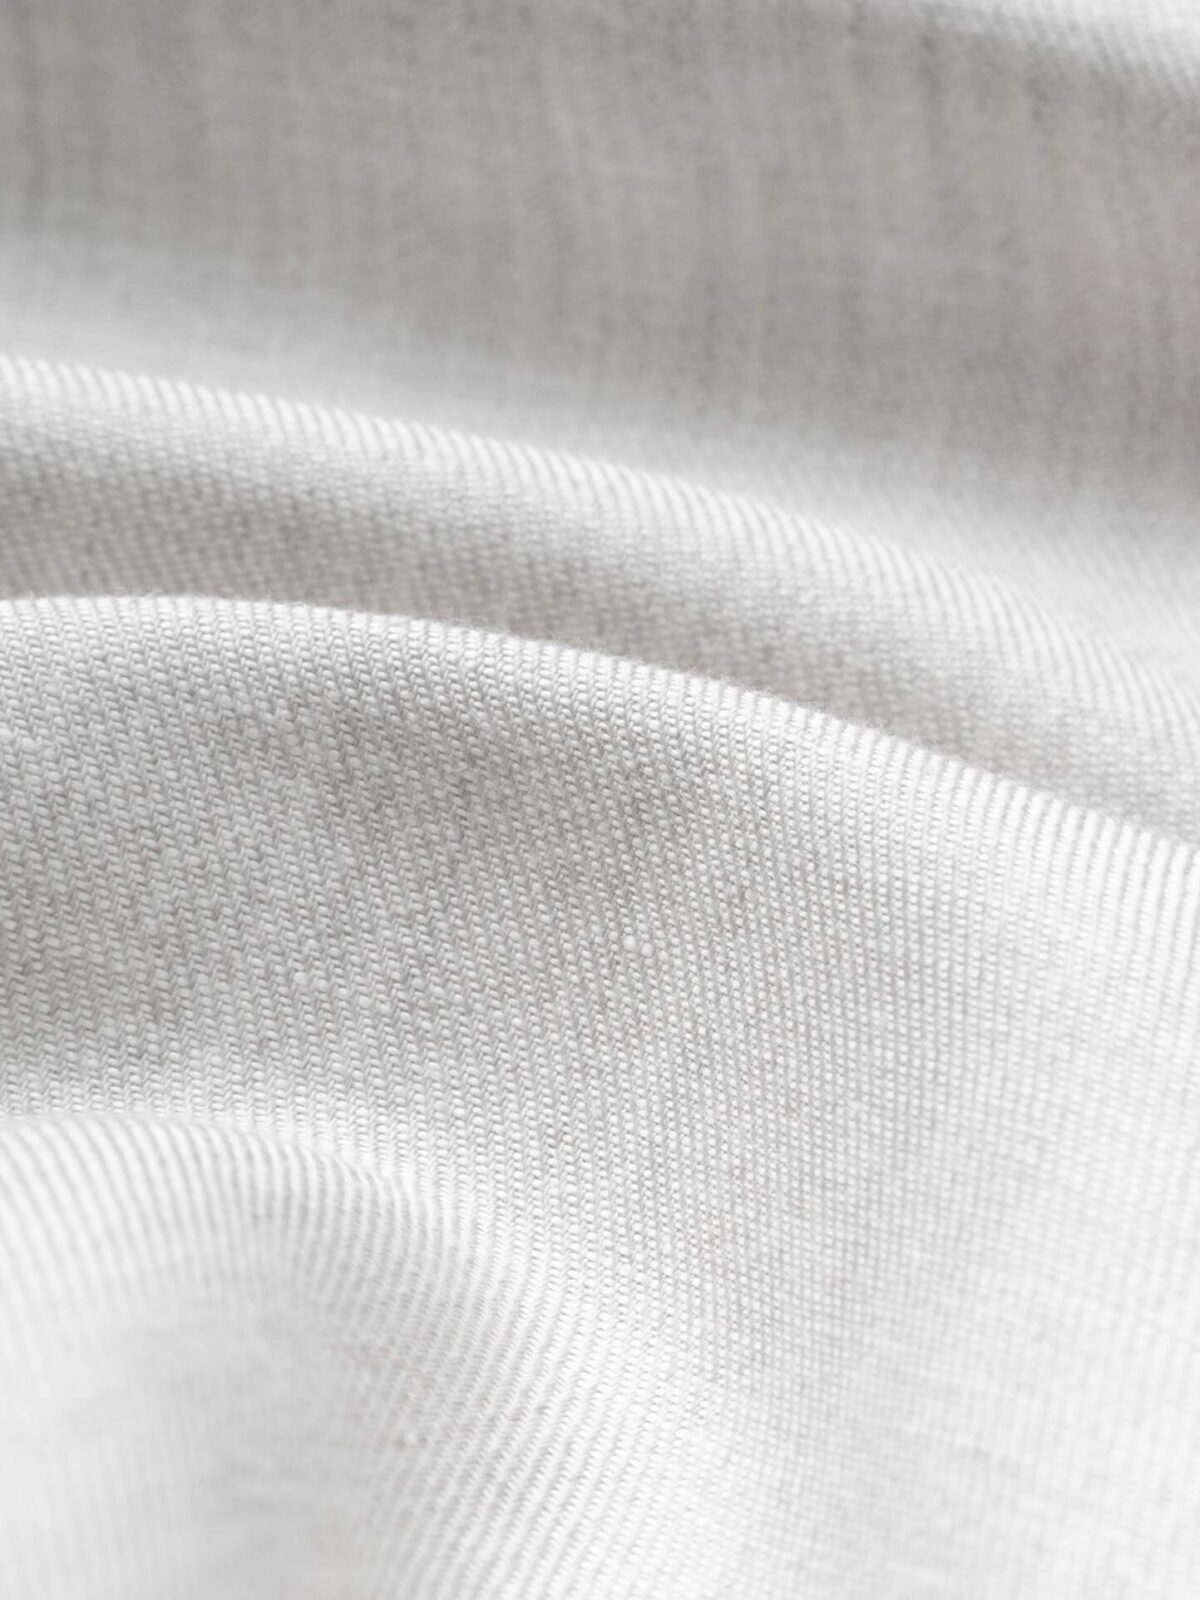 Portuguese Light Grey Hemp Merino Blend Shirts by Proper Cloth